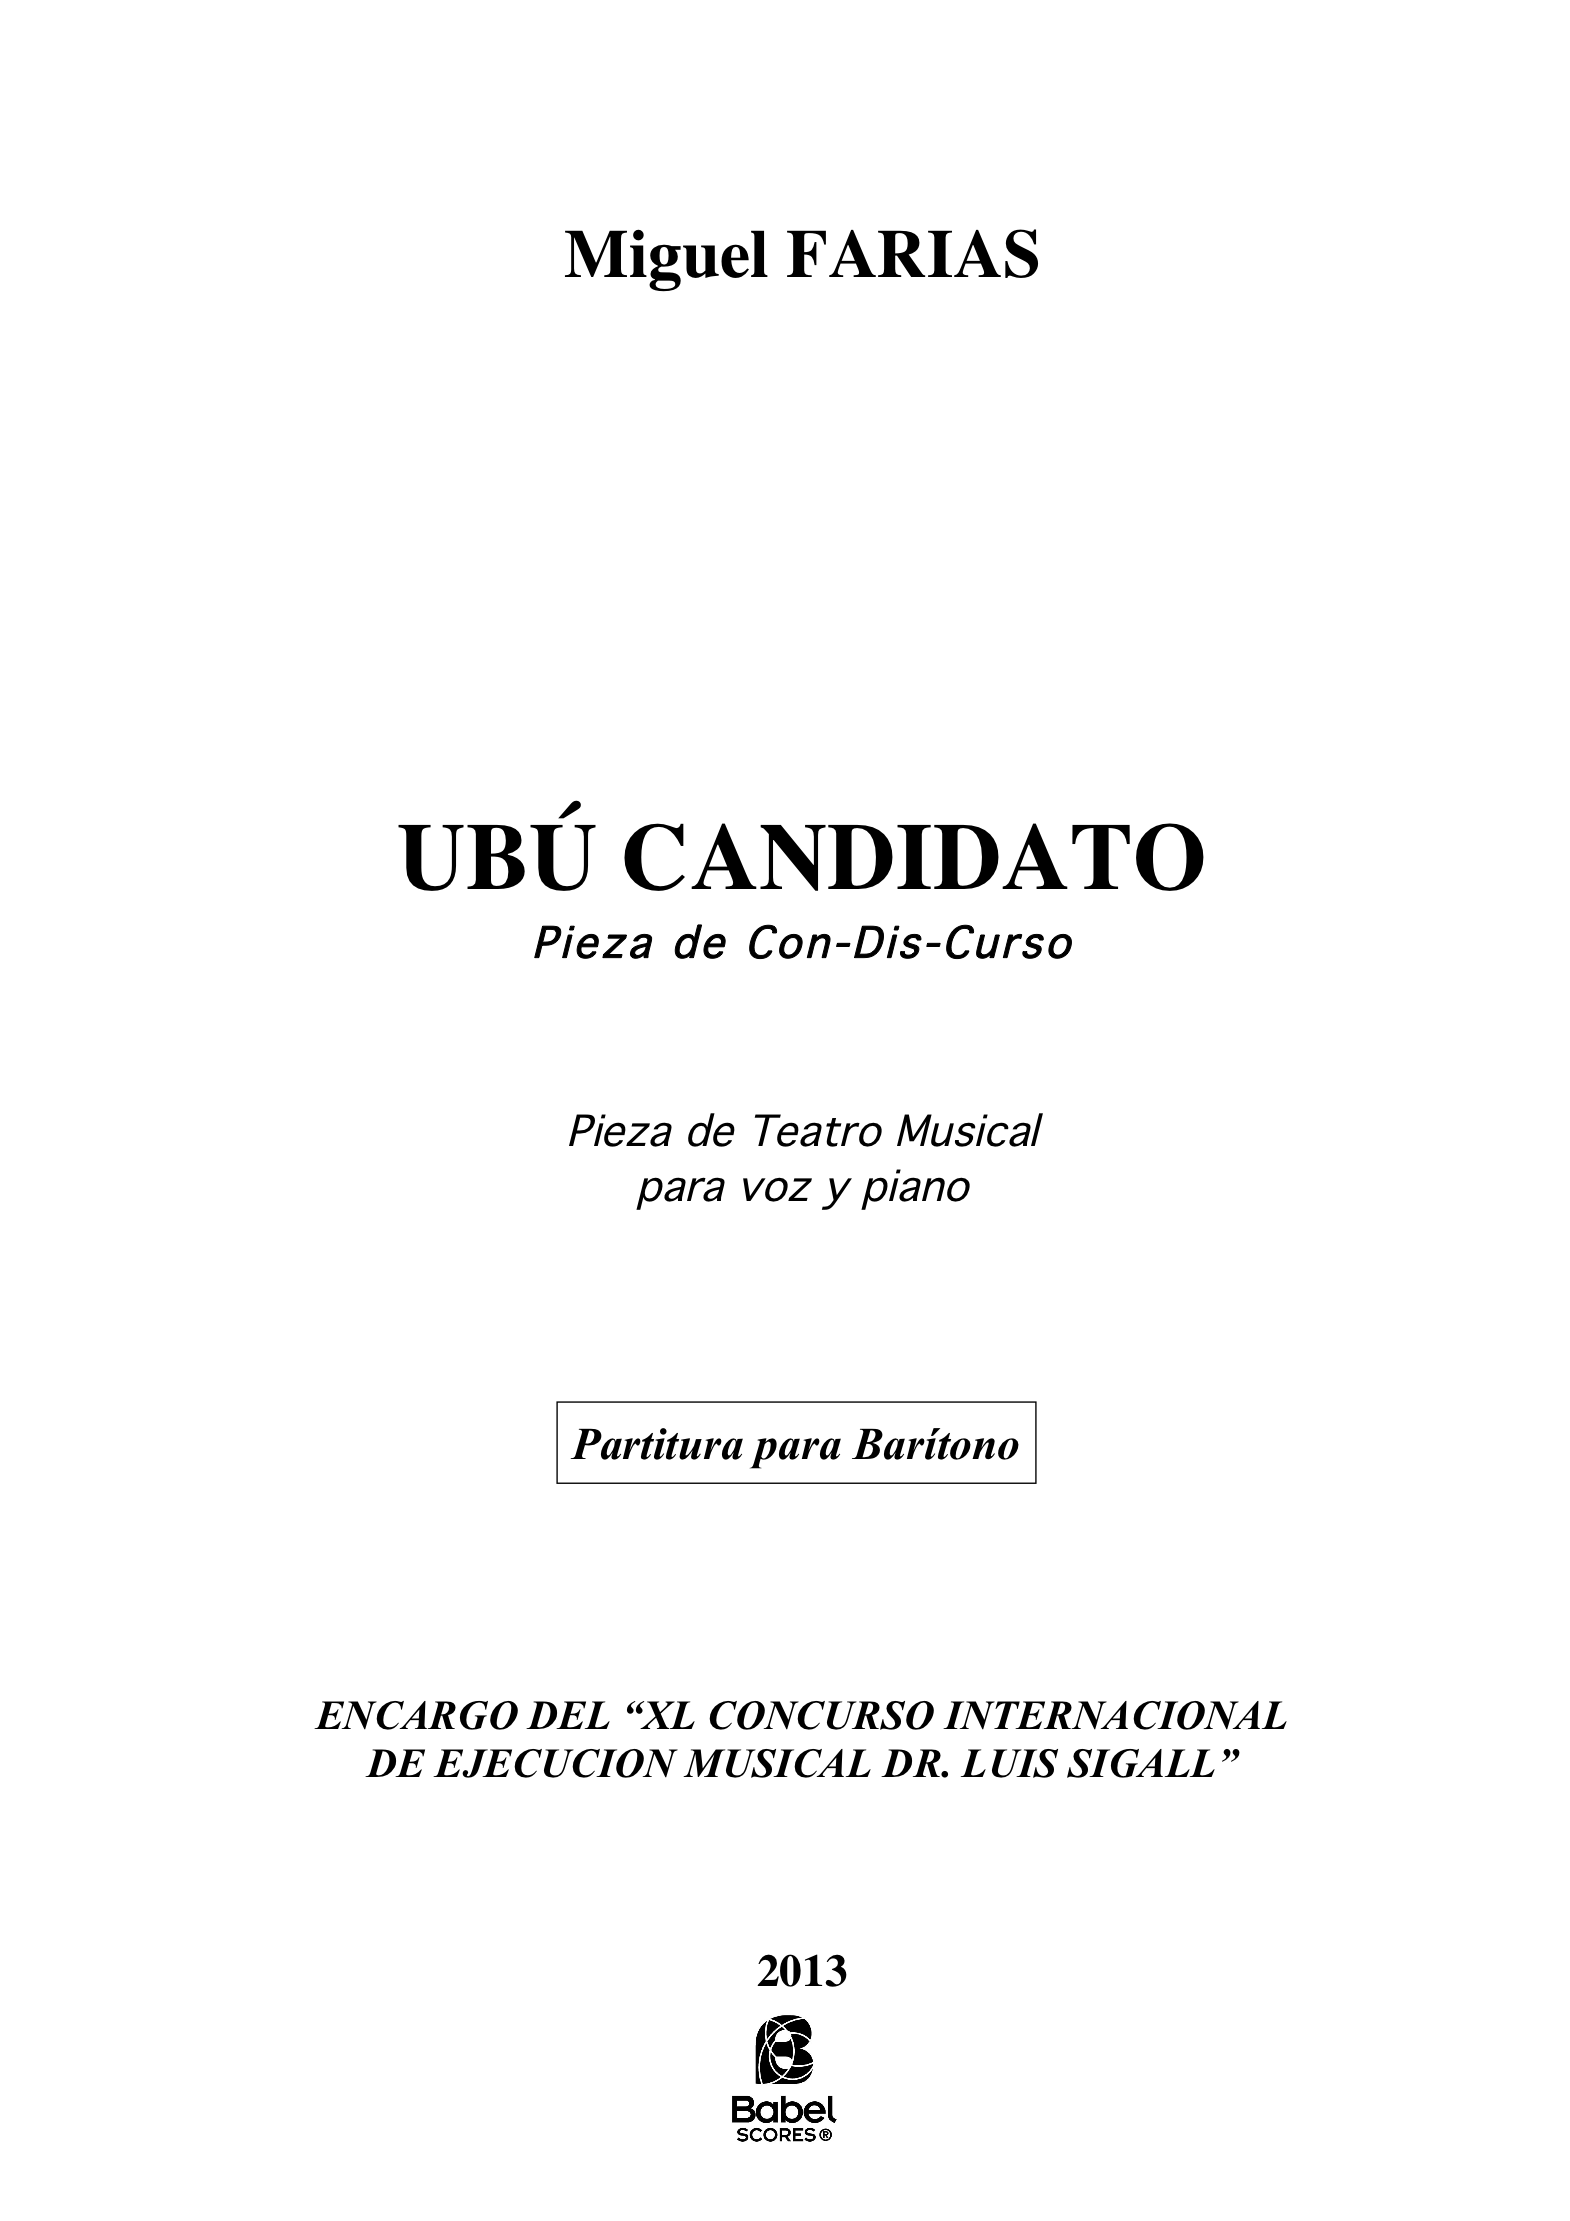 UBU baritono A4 z 2 127 1 369